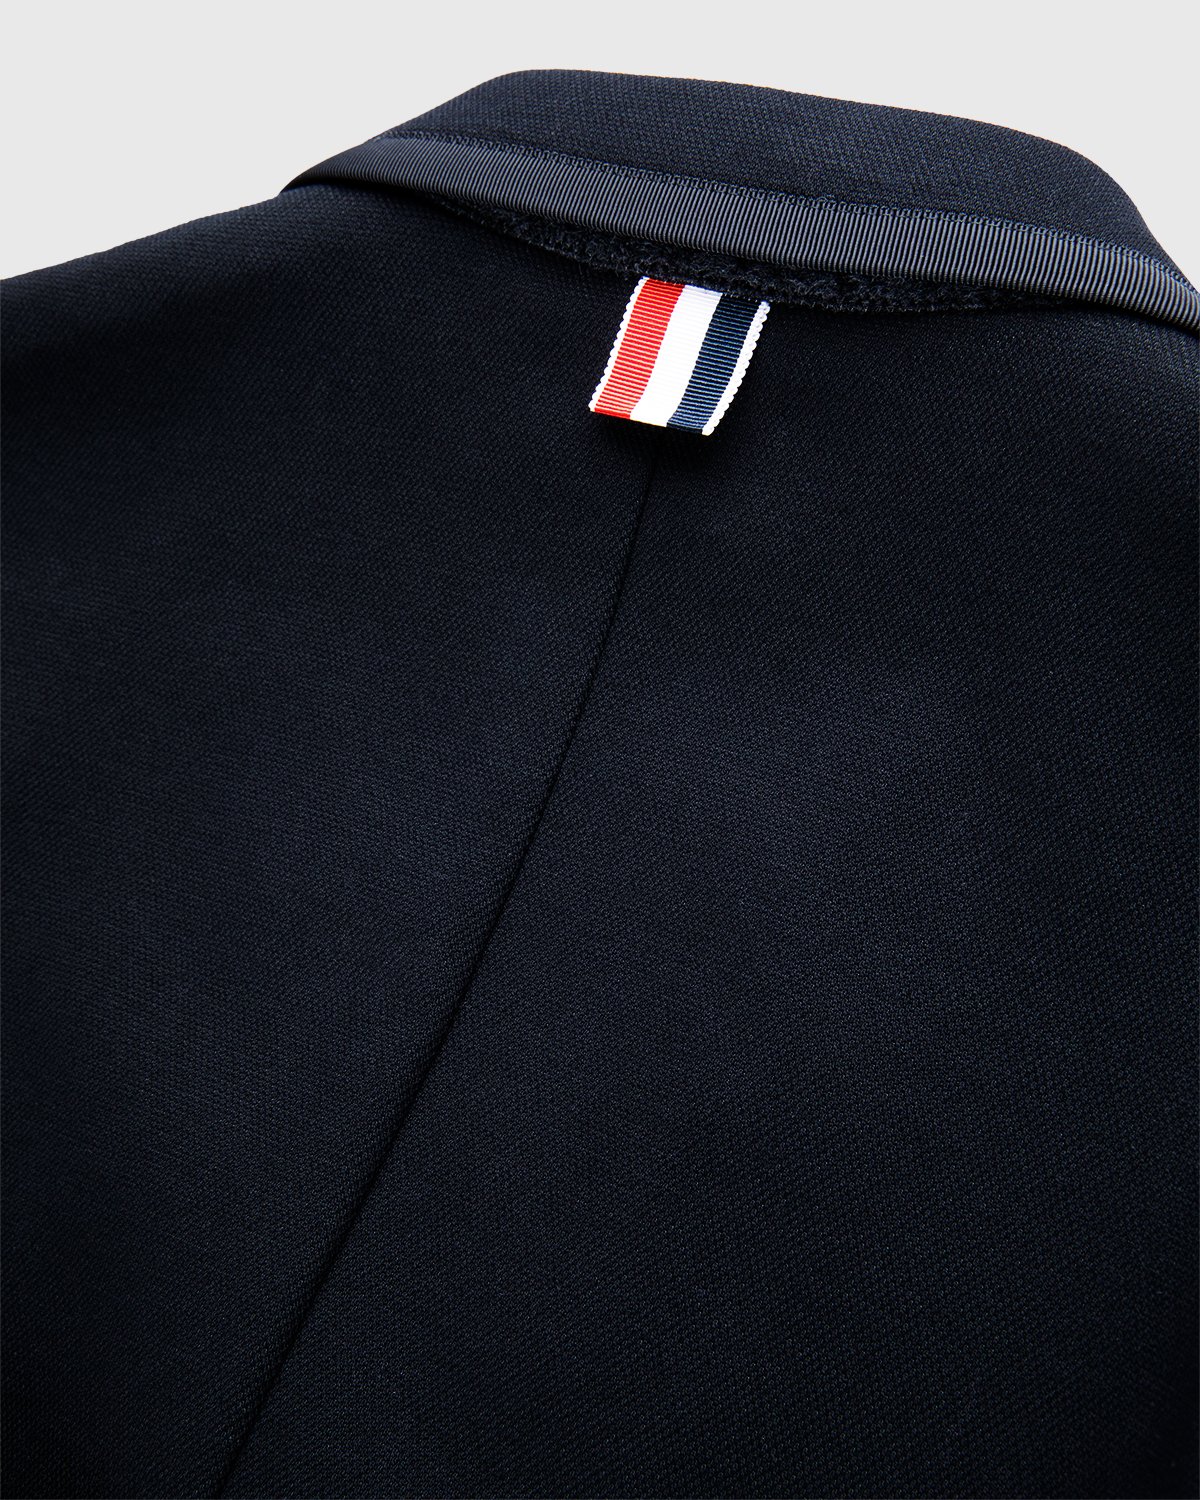 Thom Browne x Highsnobiety - Women’s Deconstructed Sport Jacket Black - Clothing - Black - Image 4